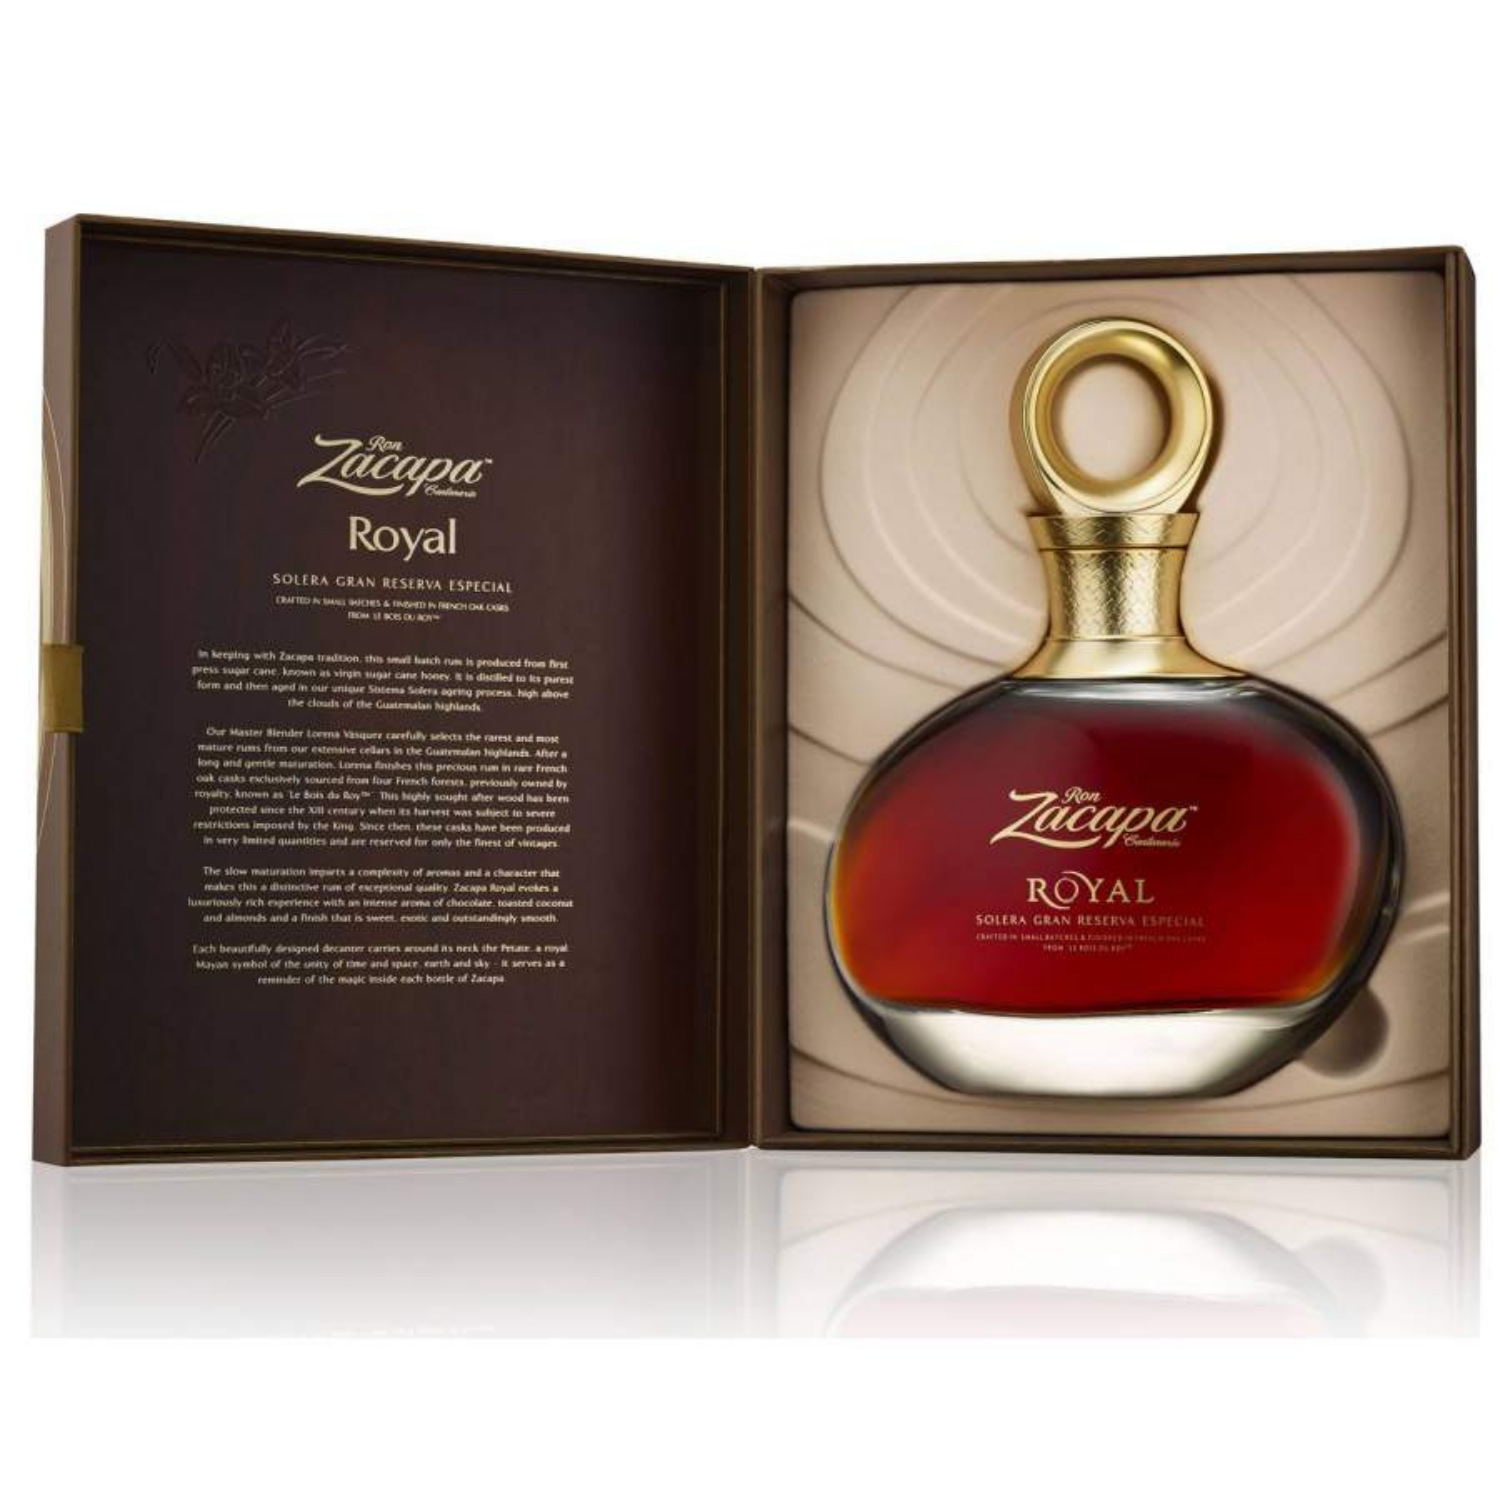 Rum ZACAPA Royal gift box